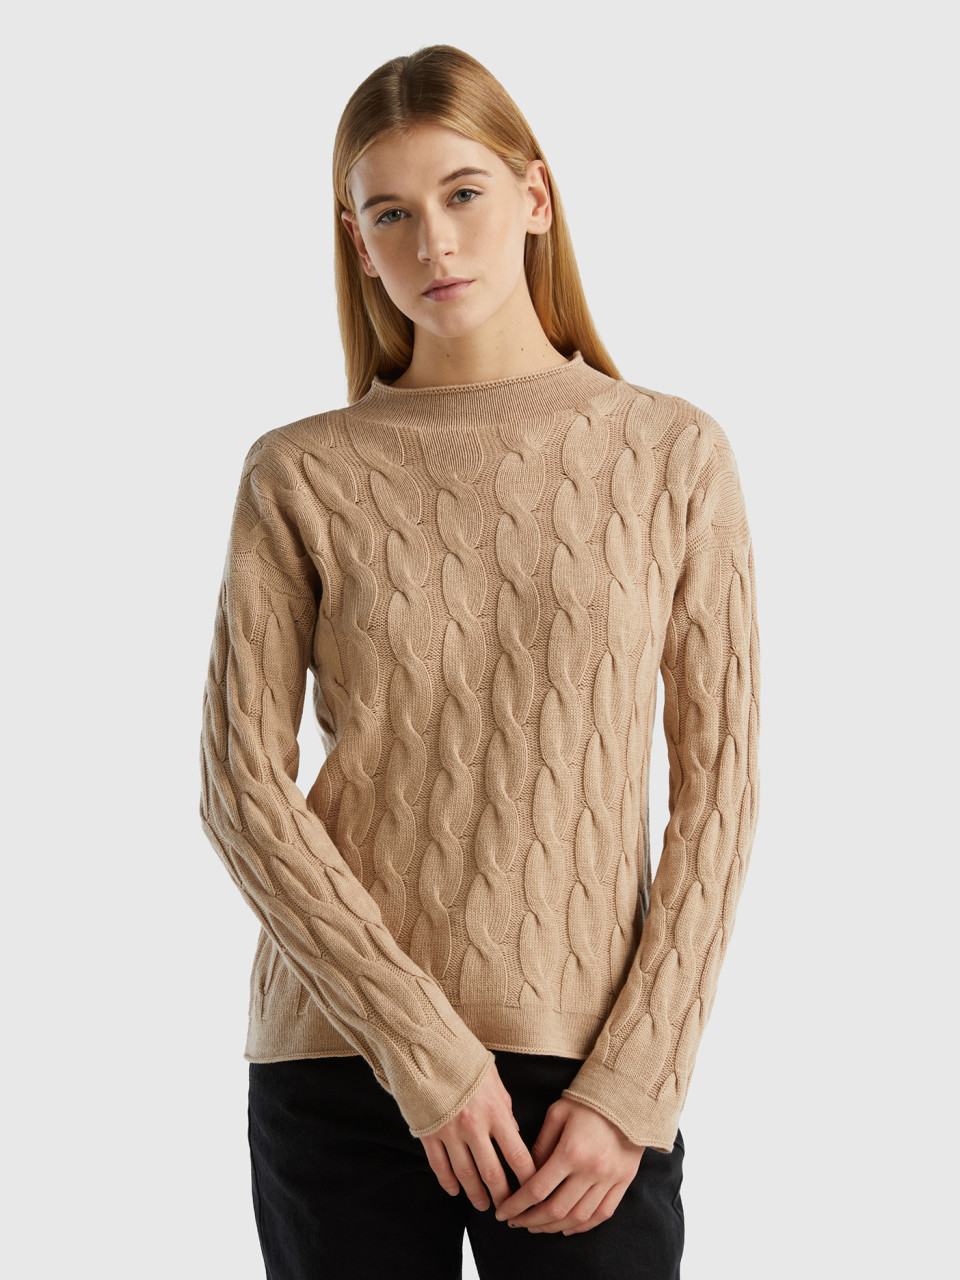 Benetton, Cable Knit Sweater, Beige, Women